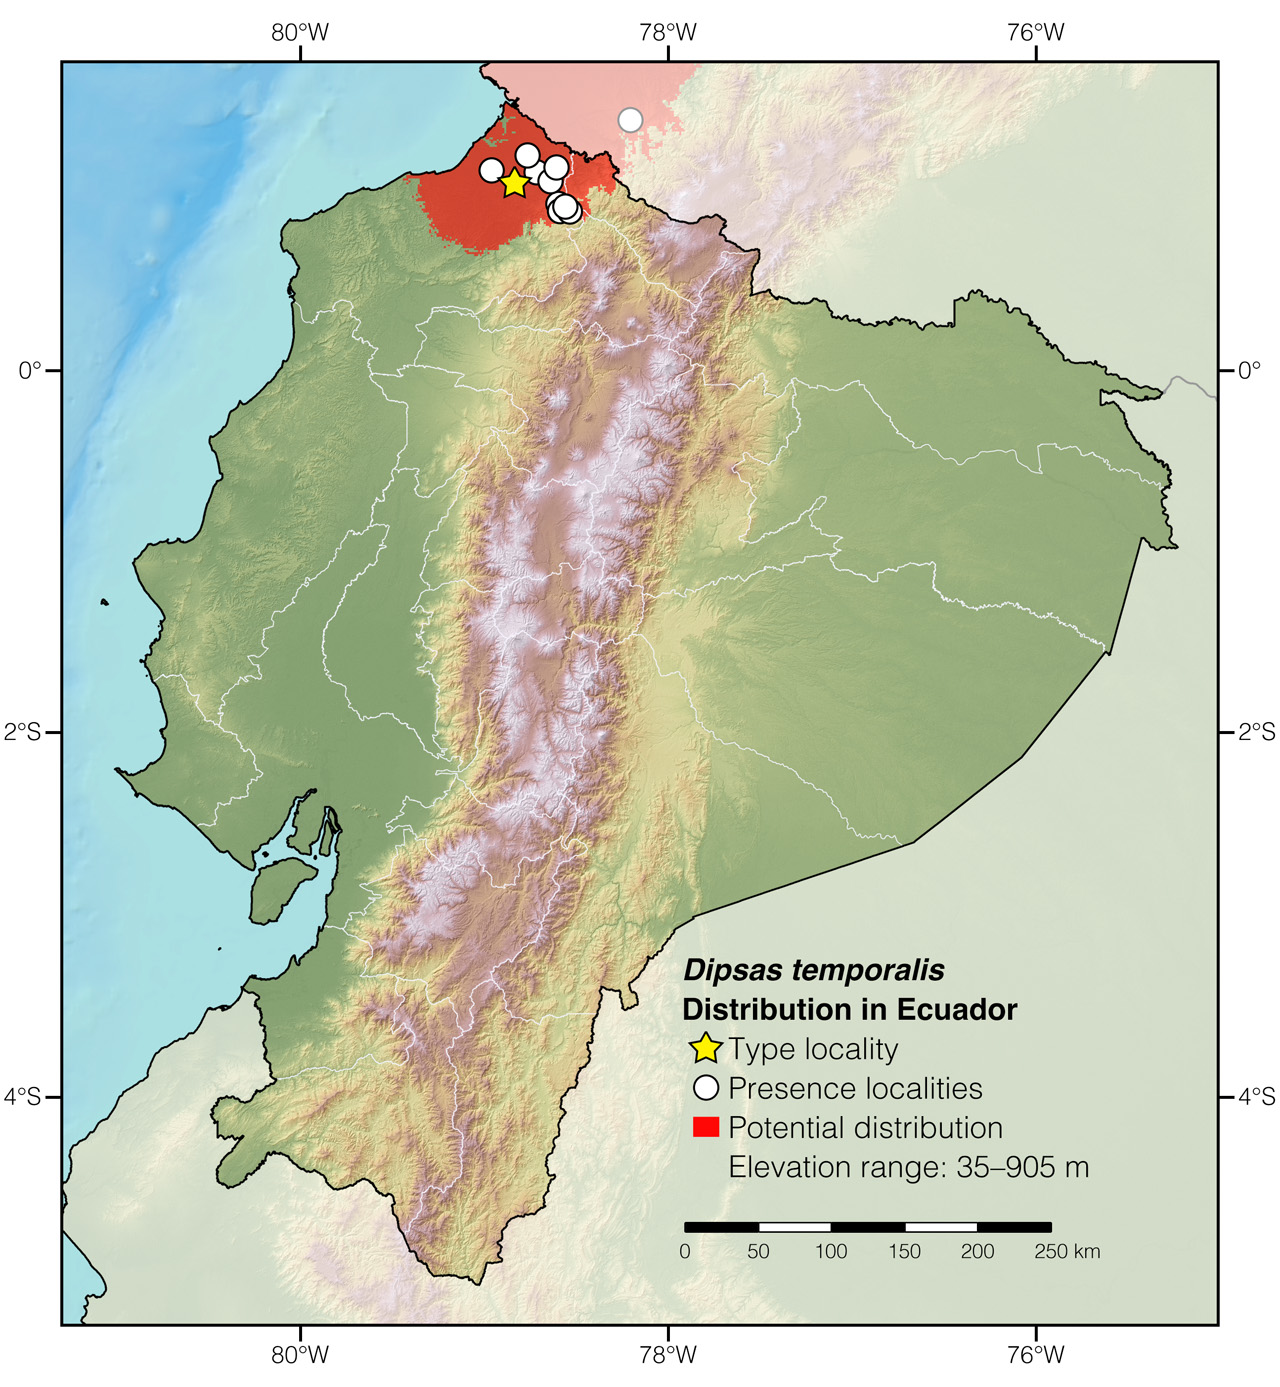 Distribution of Dipsas temporalis in Ecuador